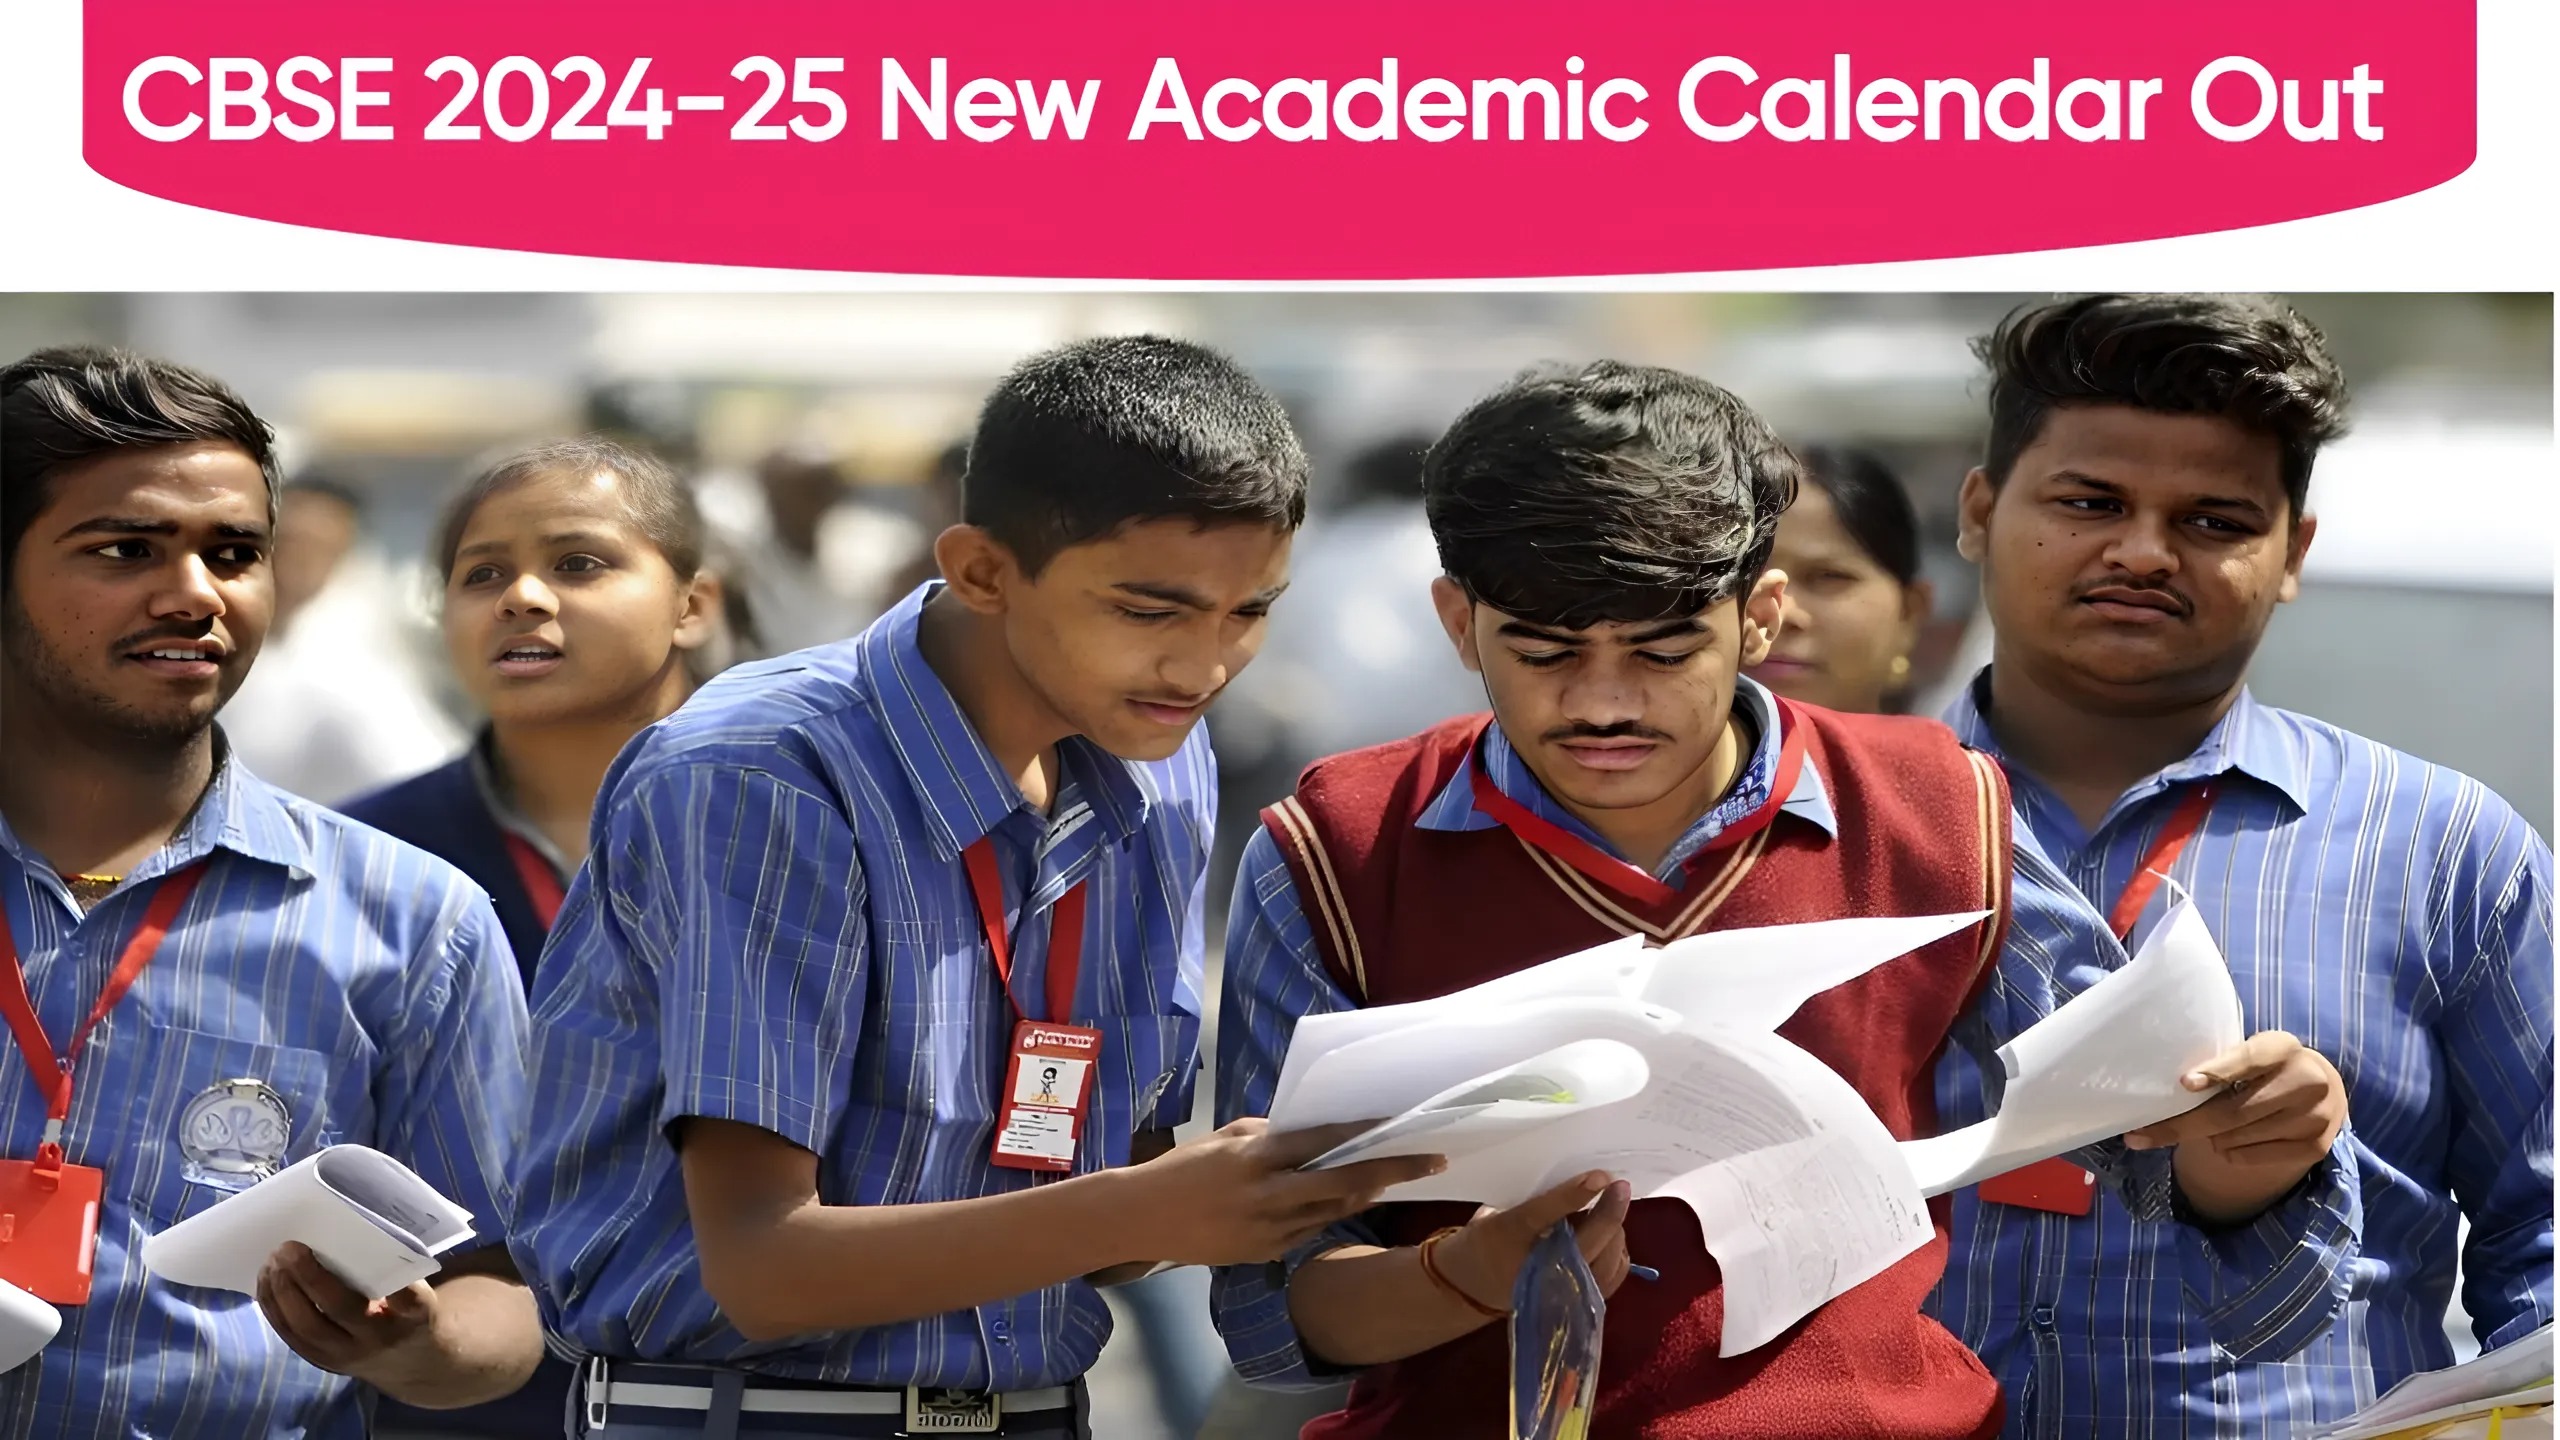 CBSE 2024-25 New Academic Calendar